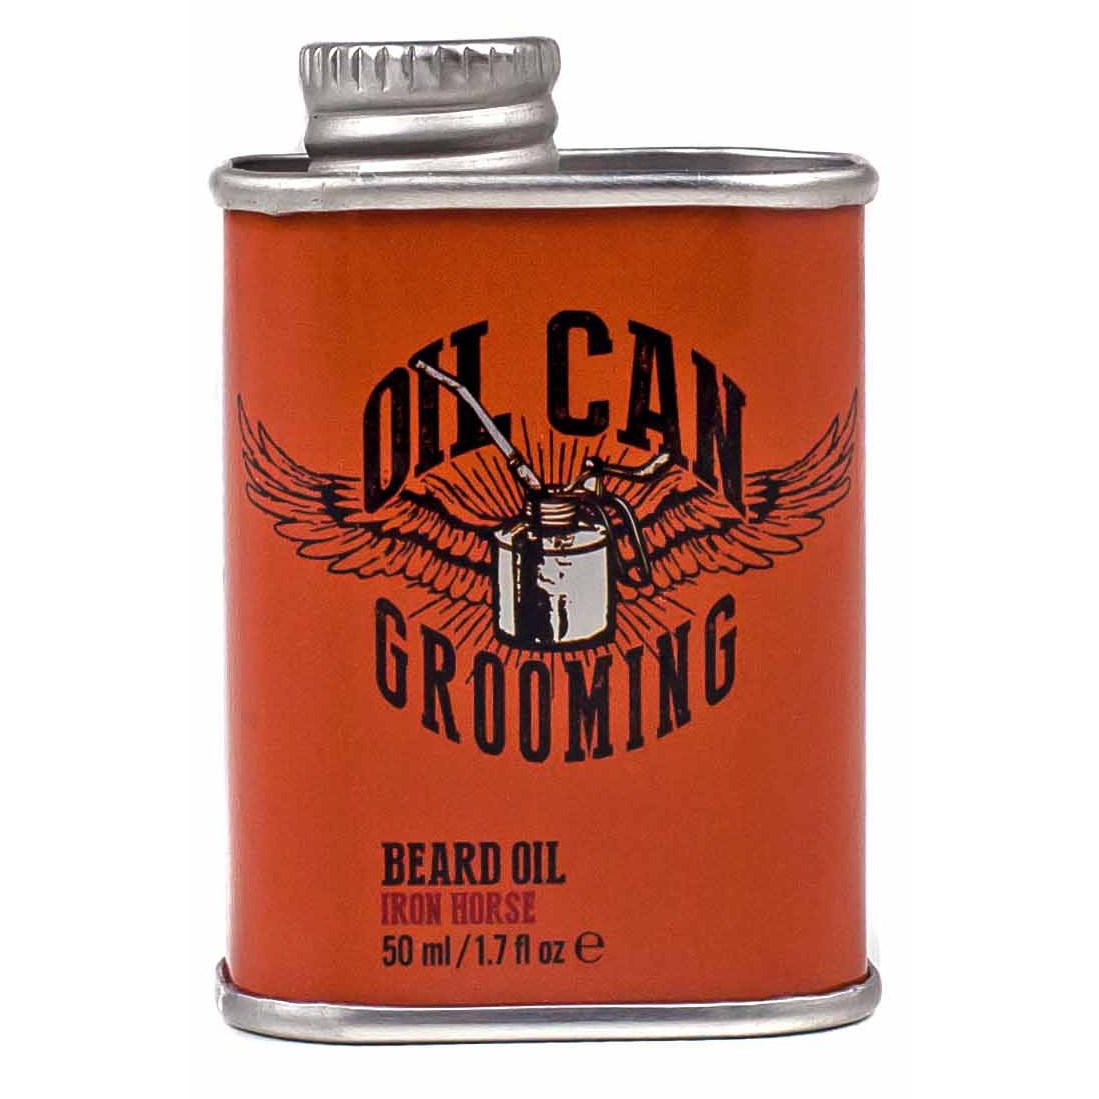 Oil Can Grooming Iron Horse Beard Oil 50ml